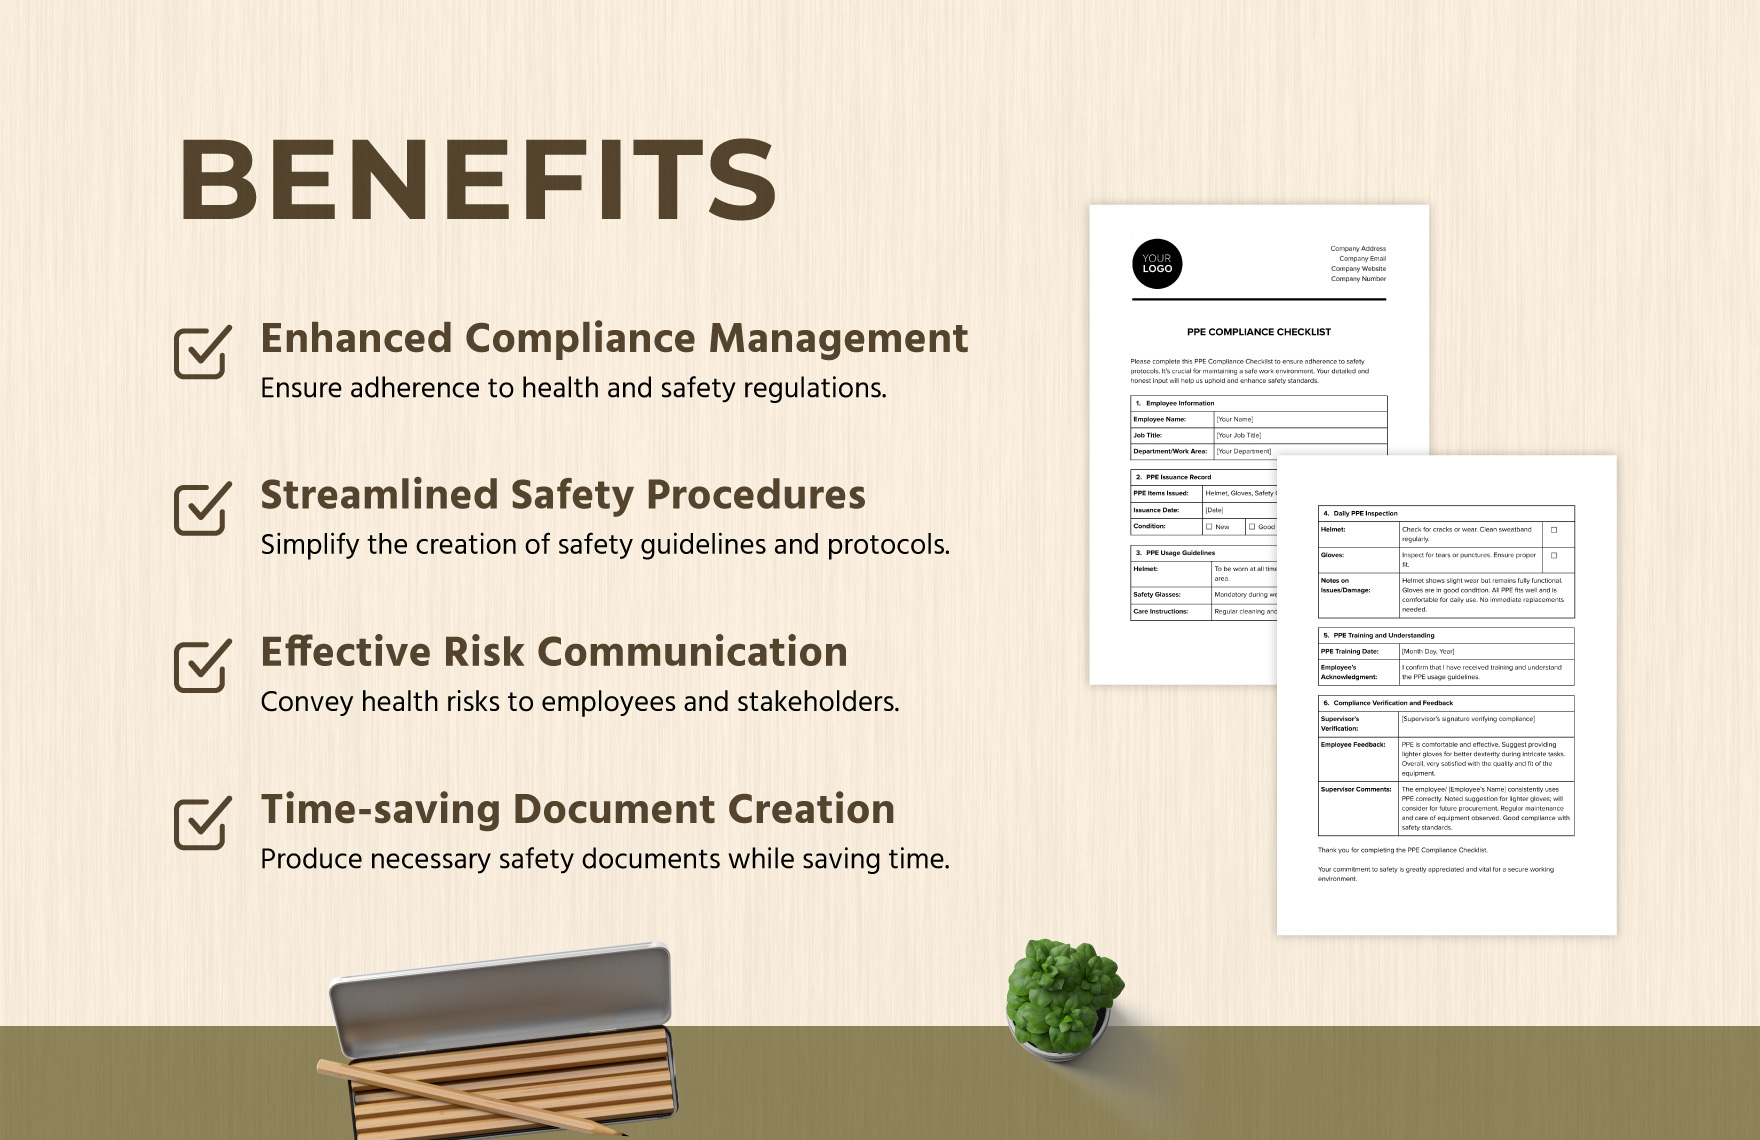 PPE Compliance Checklist Template